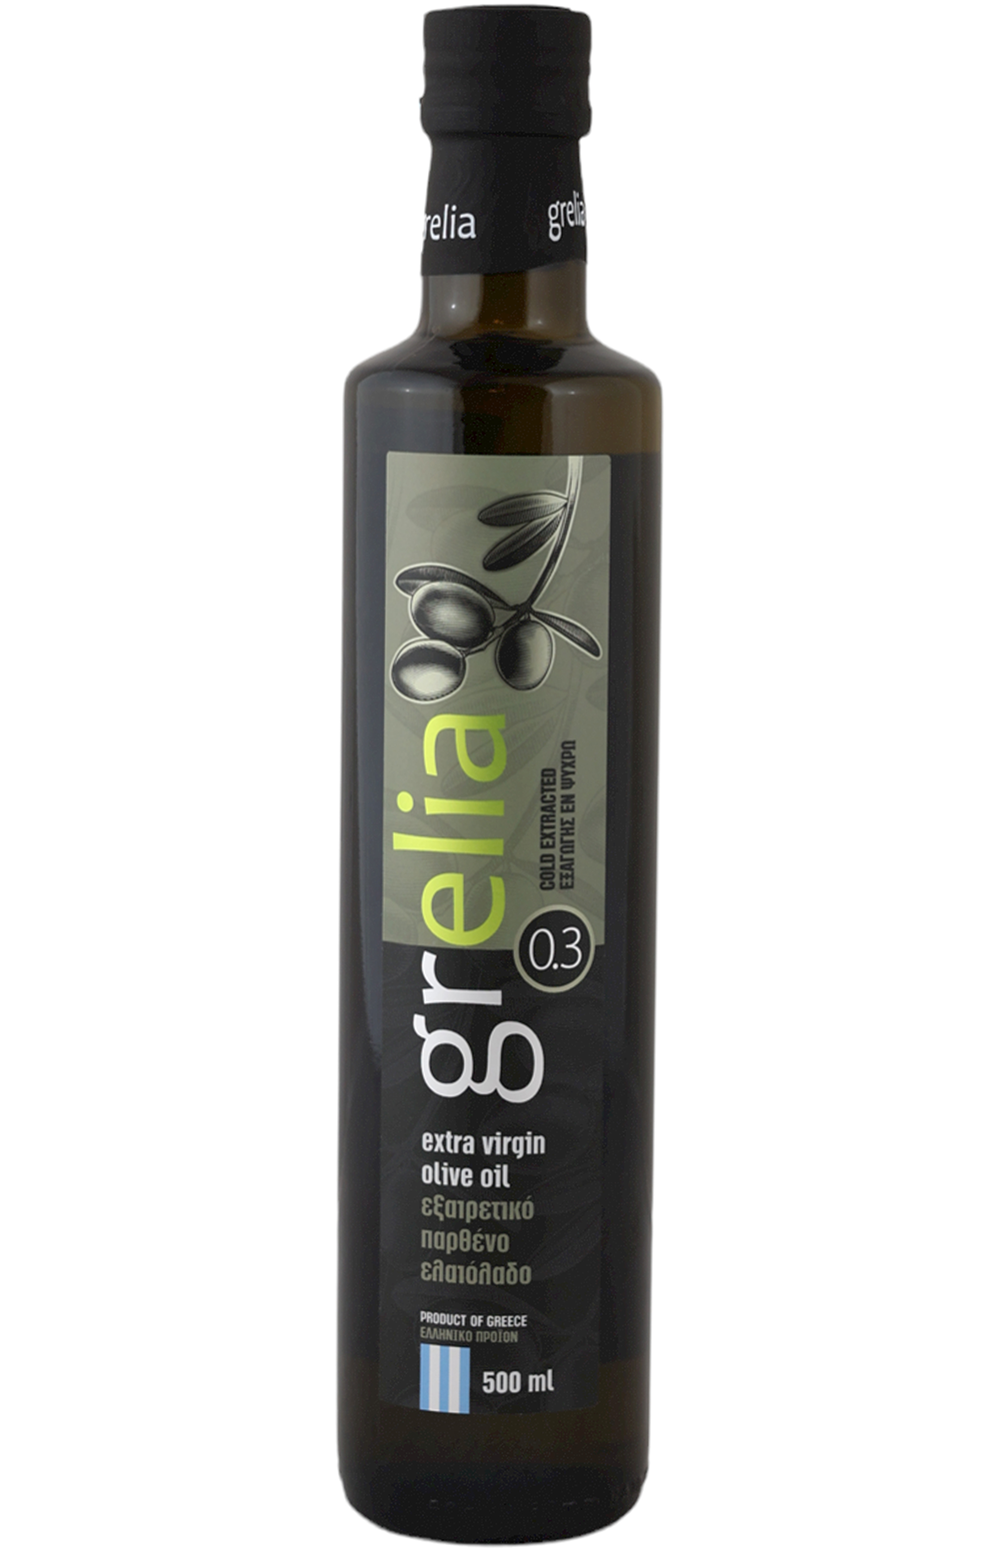 Grelia Extra Virgin Olive Oil- στην αιτηση λεει Dorica